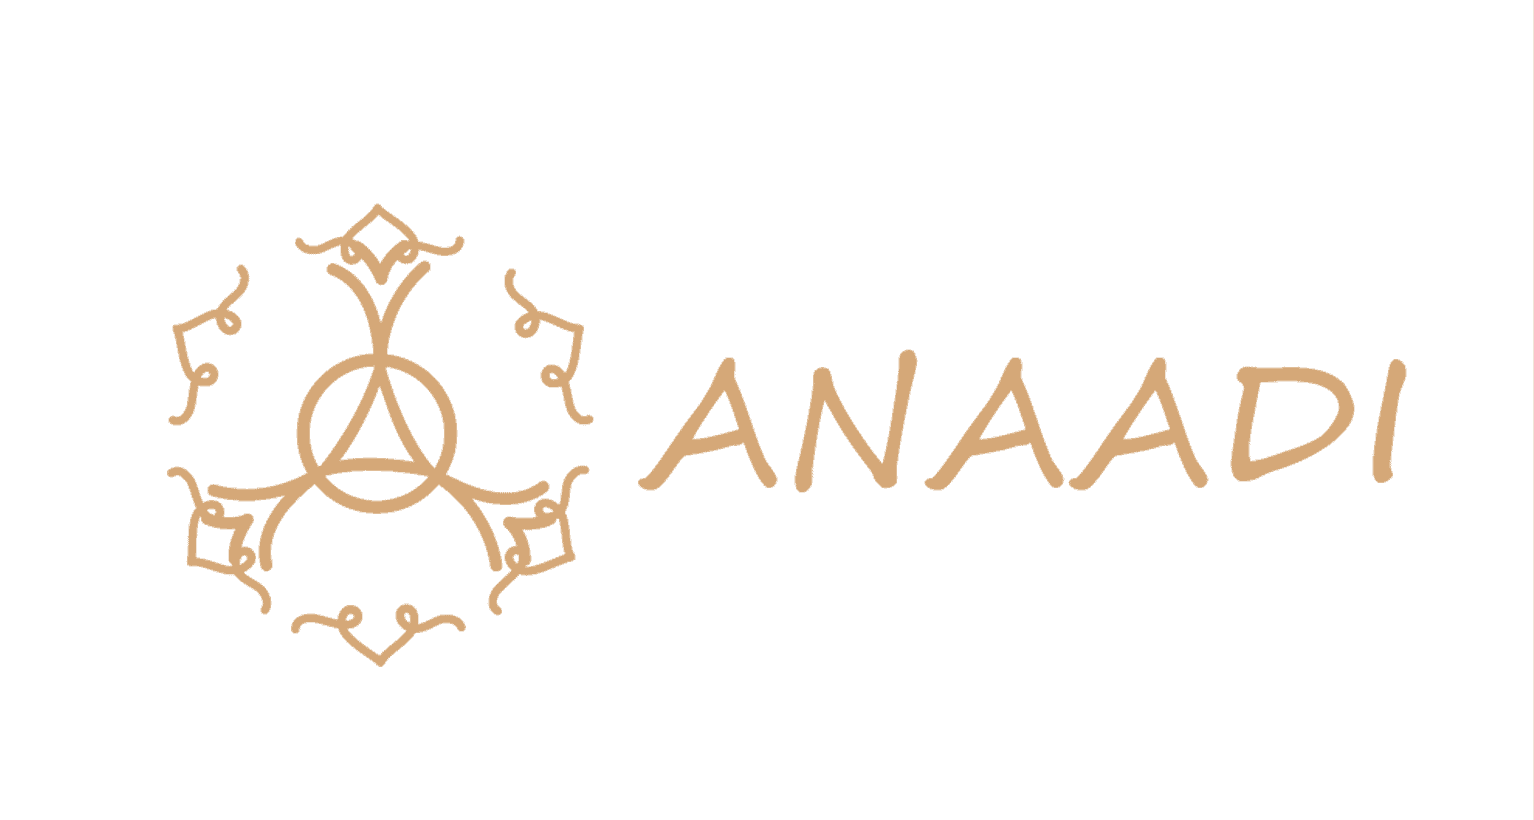 Anaadi yoga chengdu logo chengdu expat